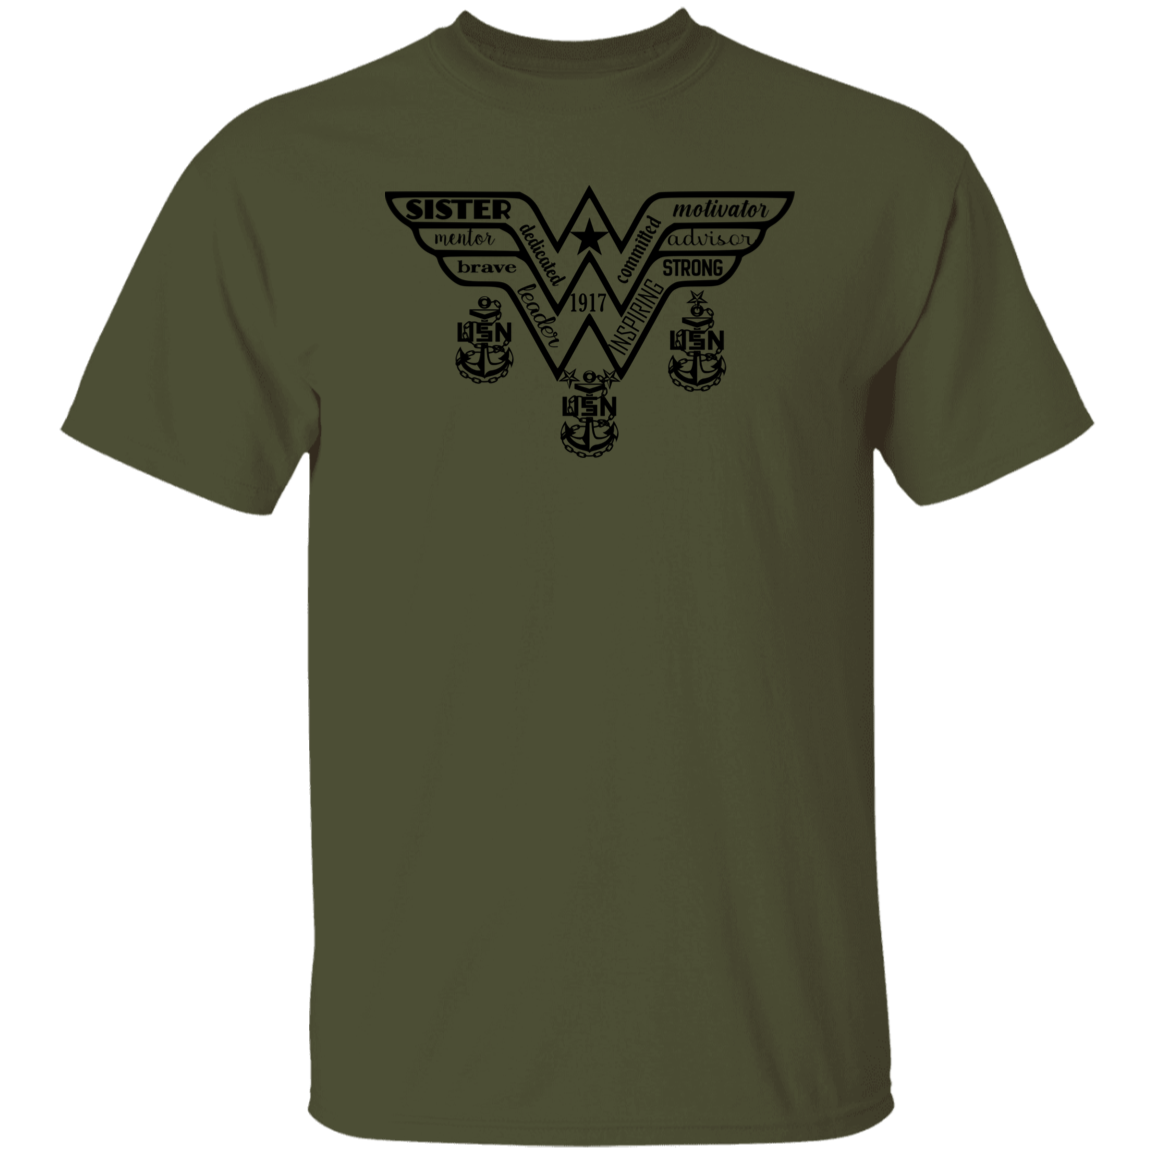 WW CPO 5.3 oz. T-Shirt